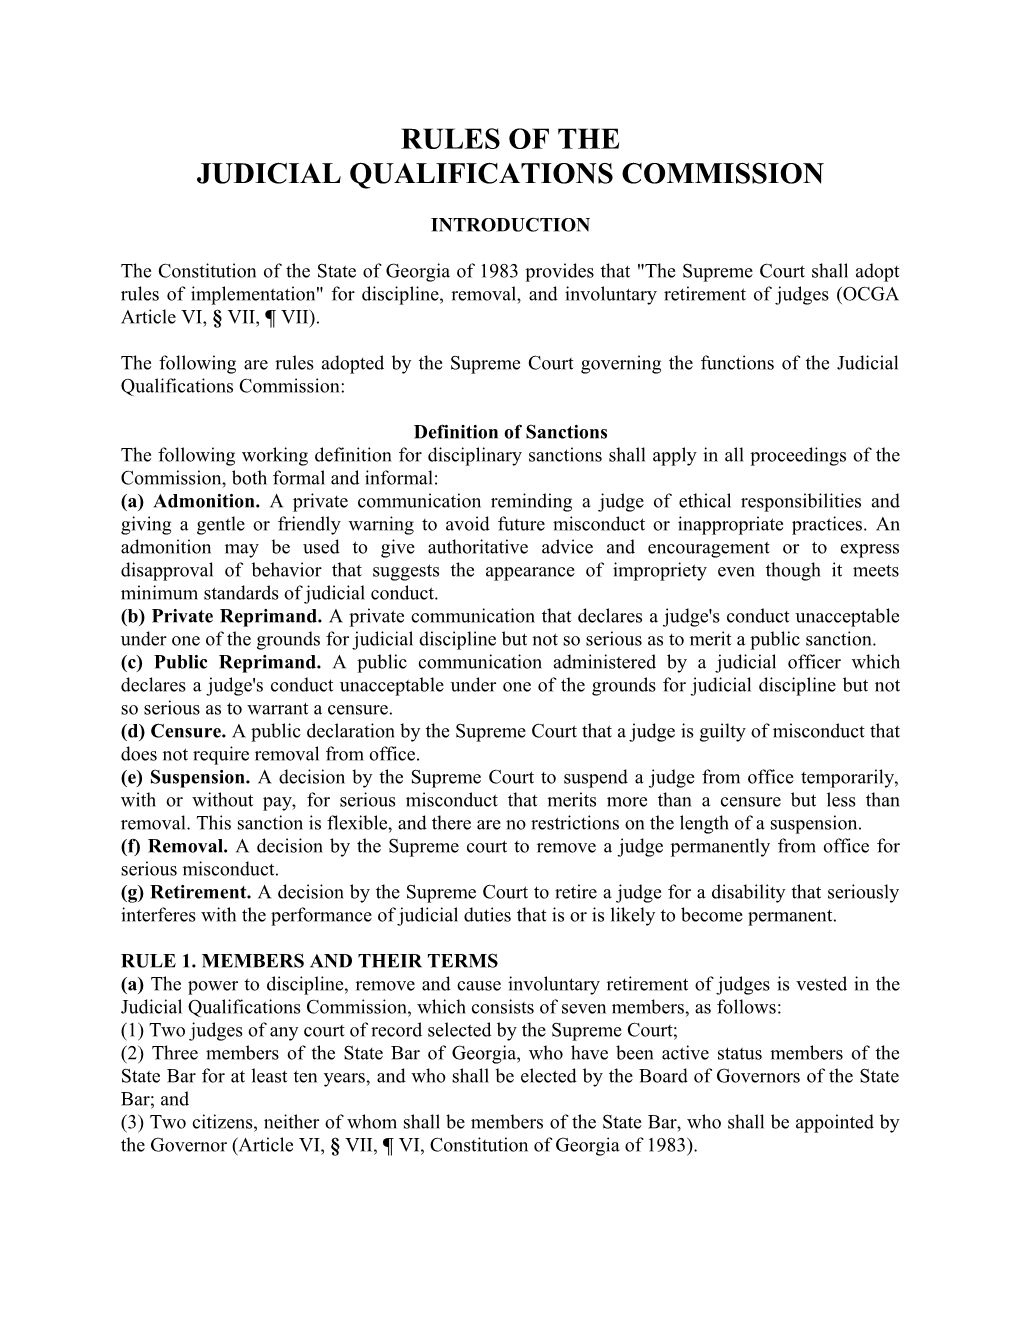 Judicial Qualifications Commission